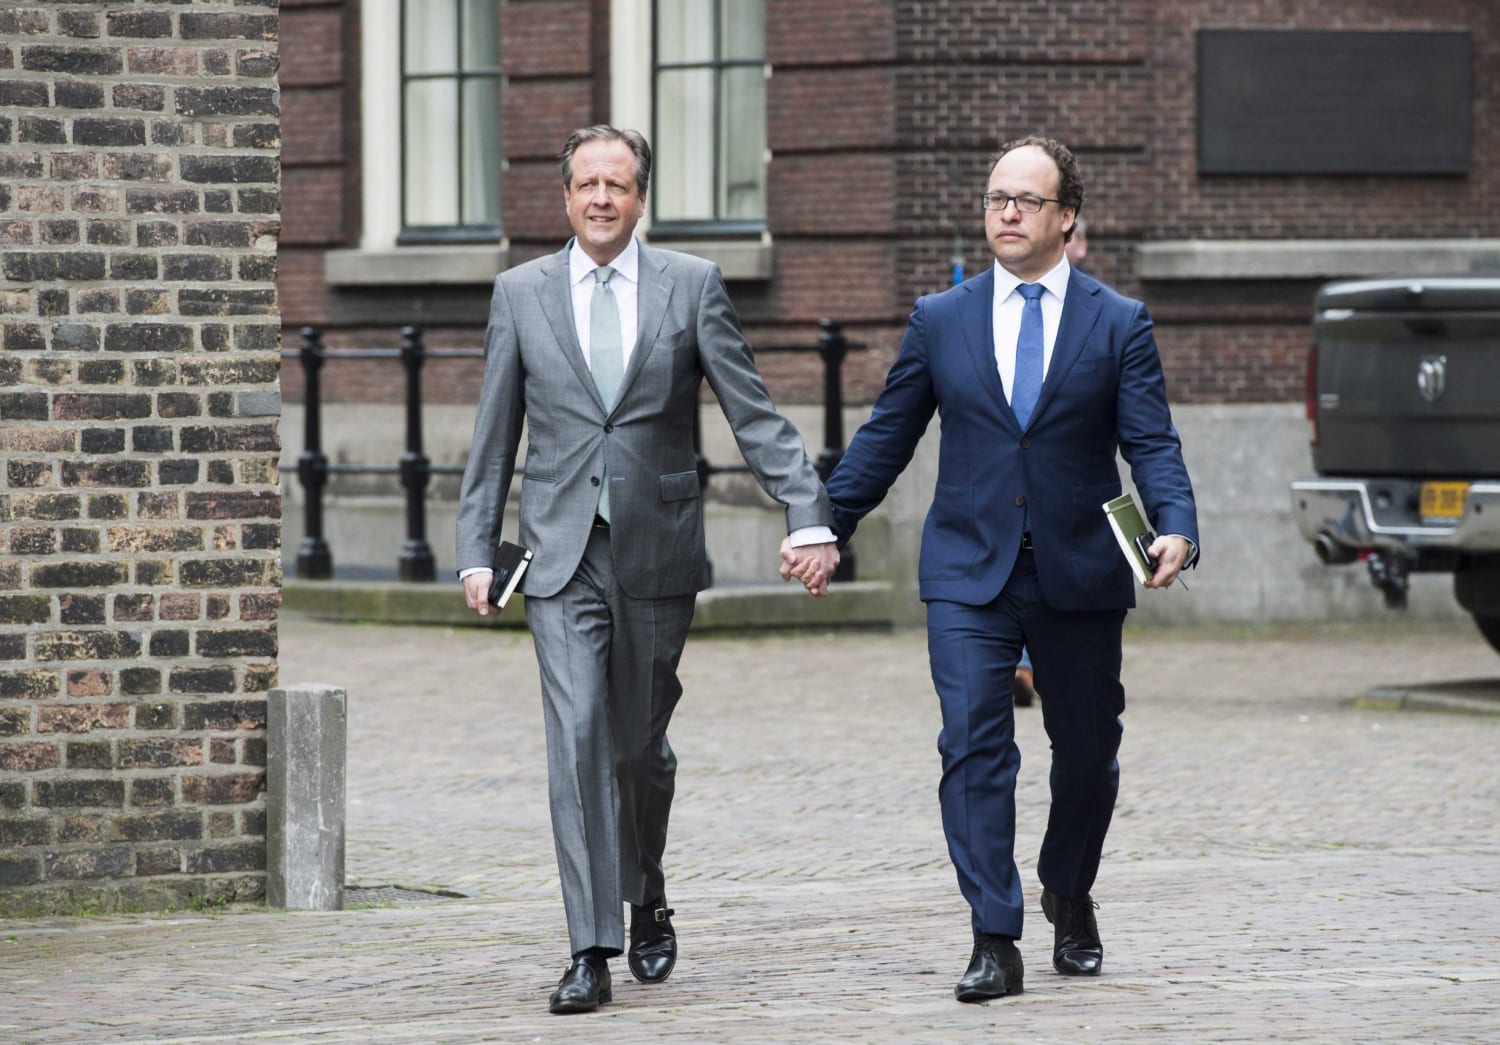 Dutch Men Hold Hands In Solidarity With Beaten Gay Couple